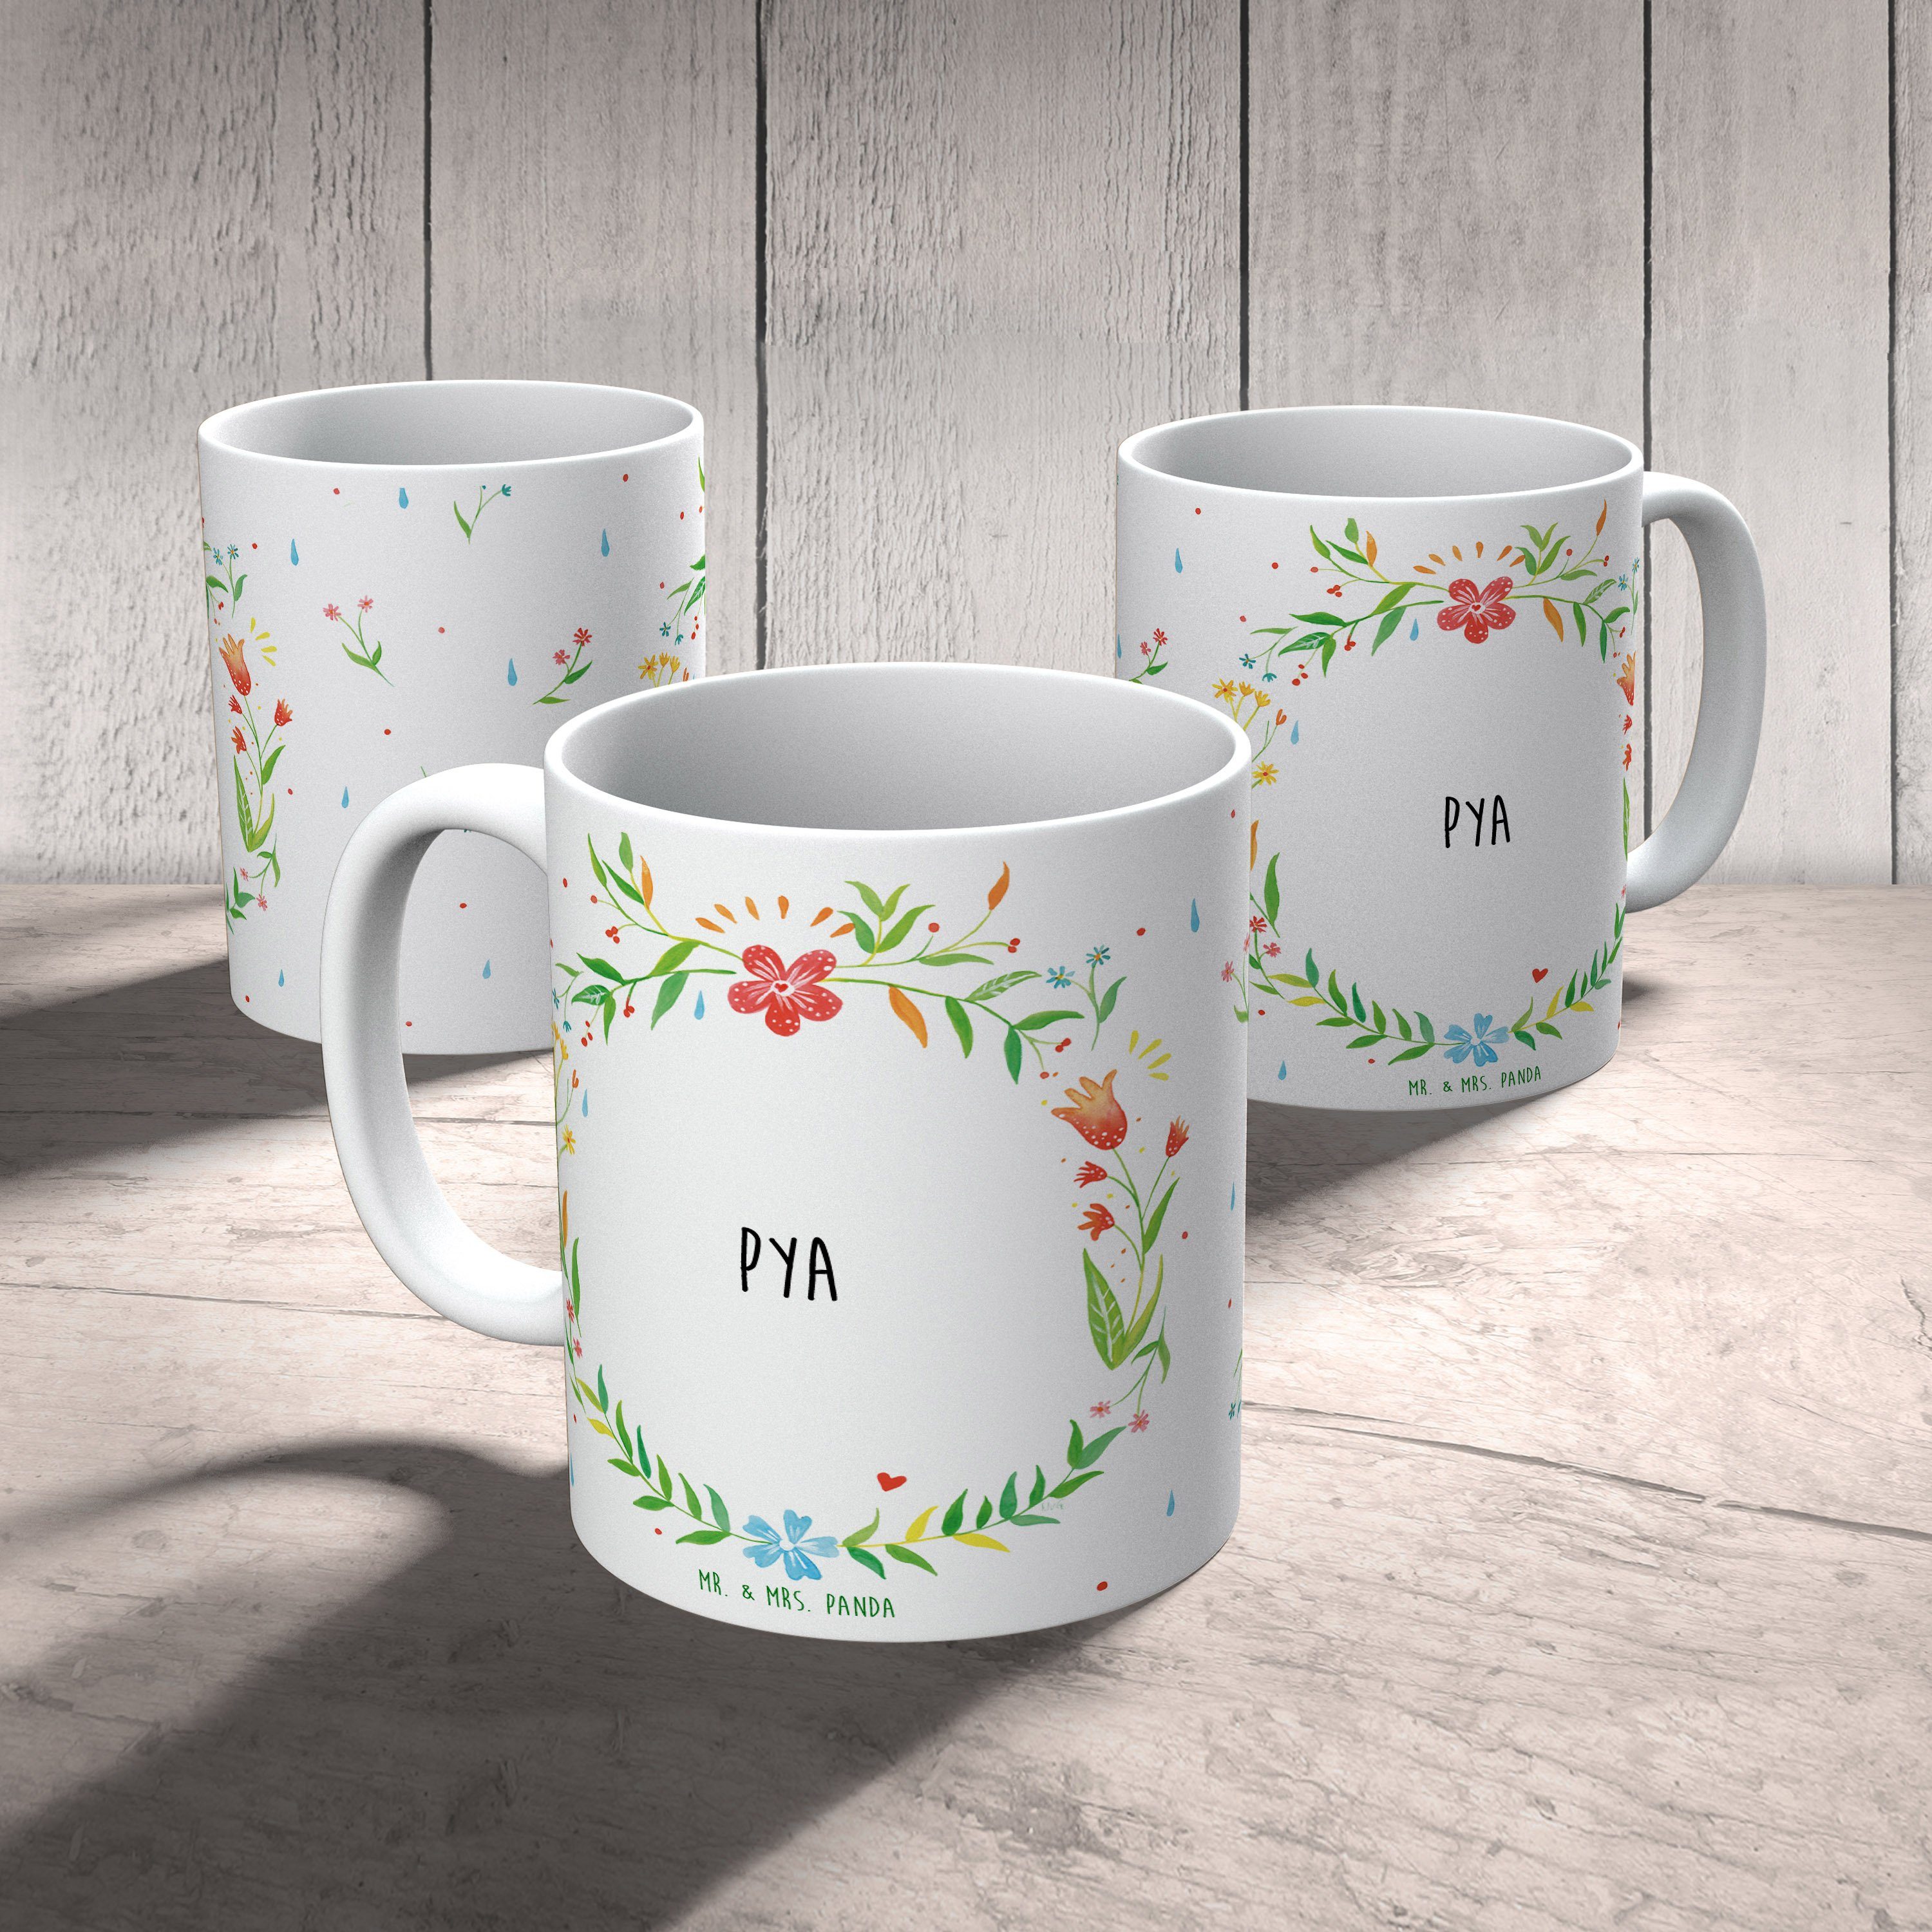 Teetasse, - Tasse Kaffeebecher, Motive, Pya Mr. Büro & Por, Geschenk, Mrs. Panda Tasse, Tasse Keramik